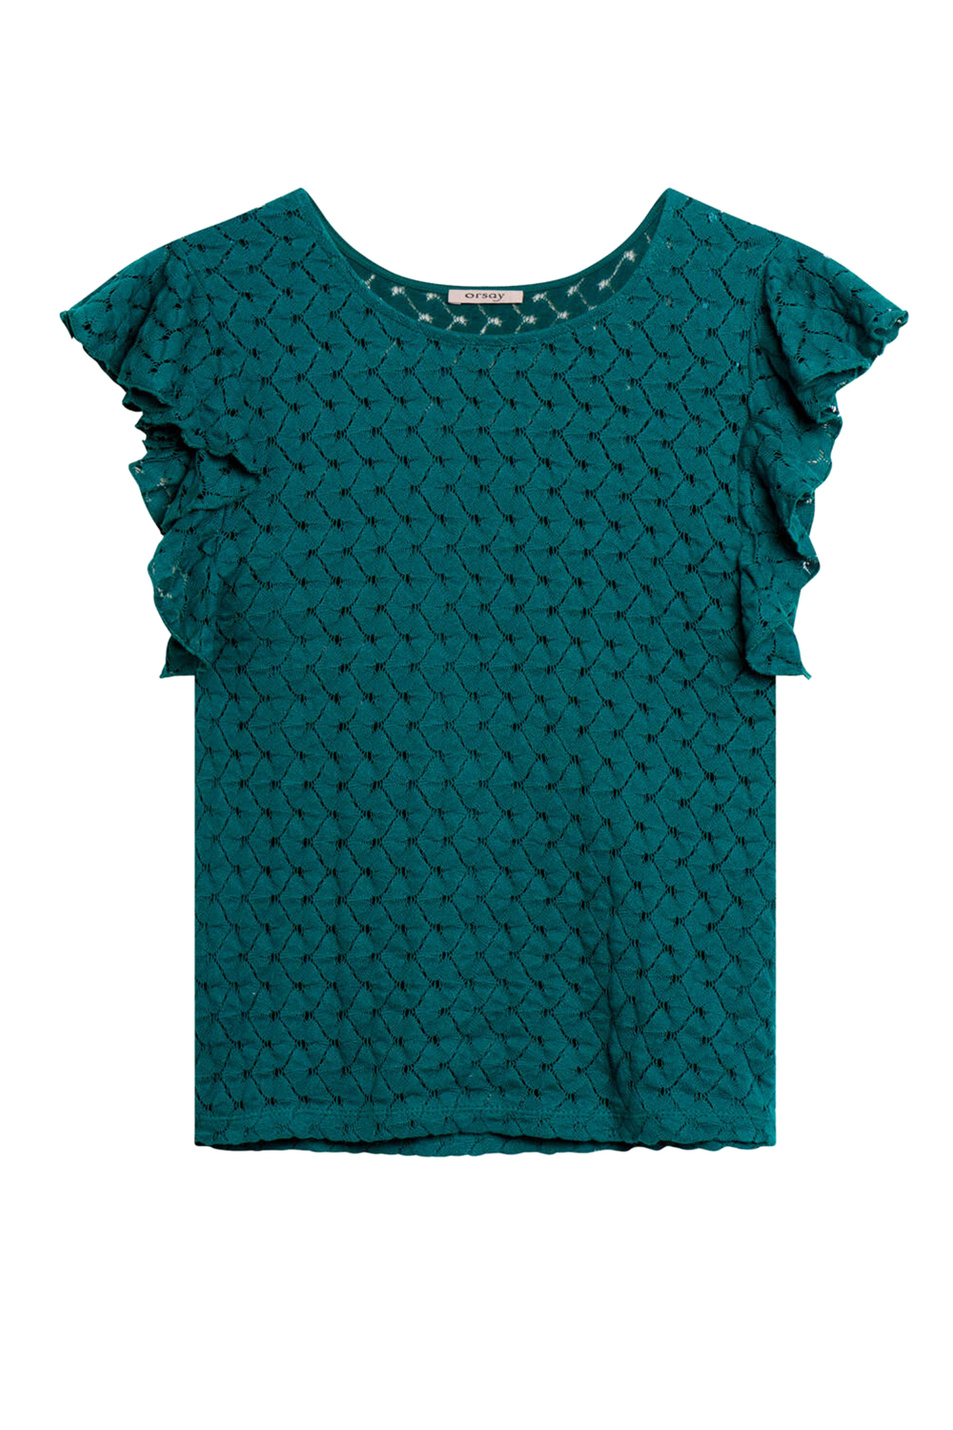 Orsay Кружевная блуза из натурального хлопка (цвет ), артикул 152107 | Фото 1